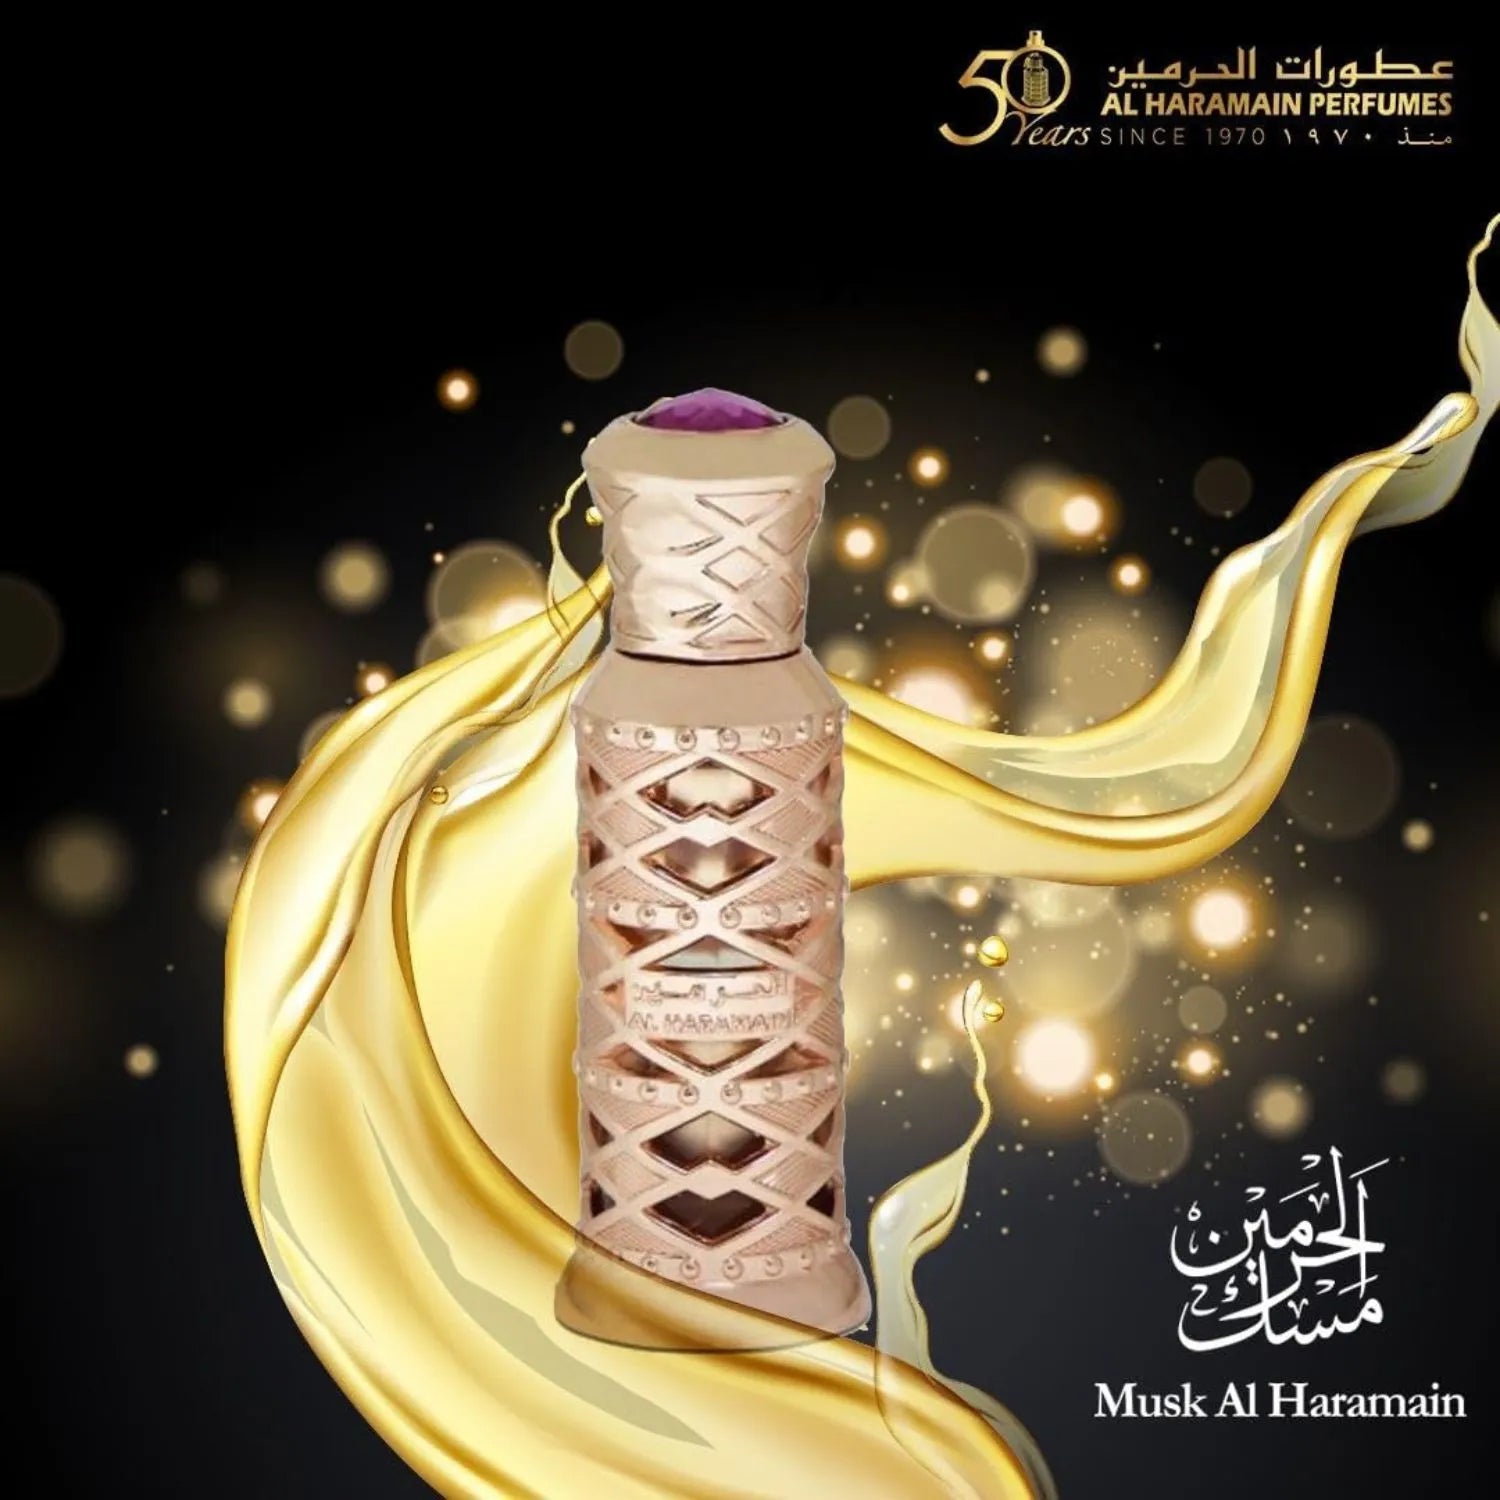 Musk Al Haramain Perfume Oil Image